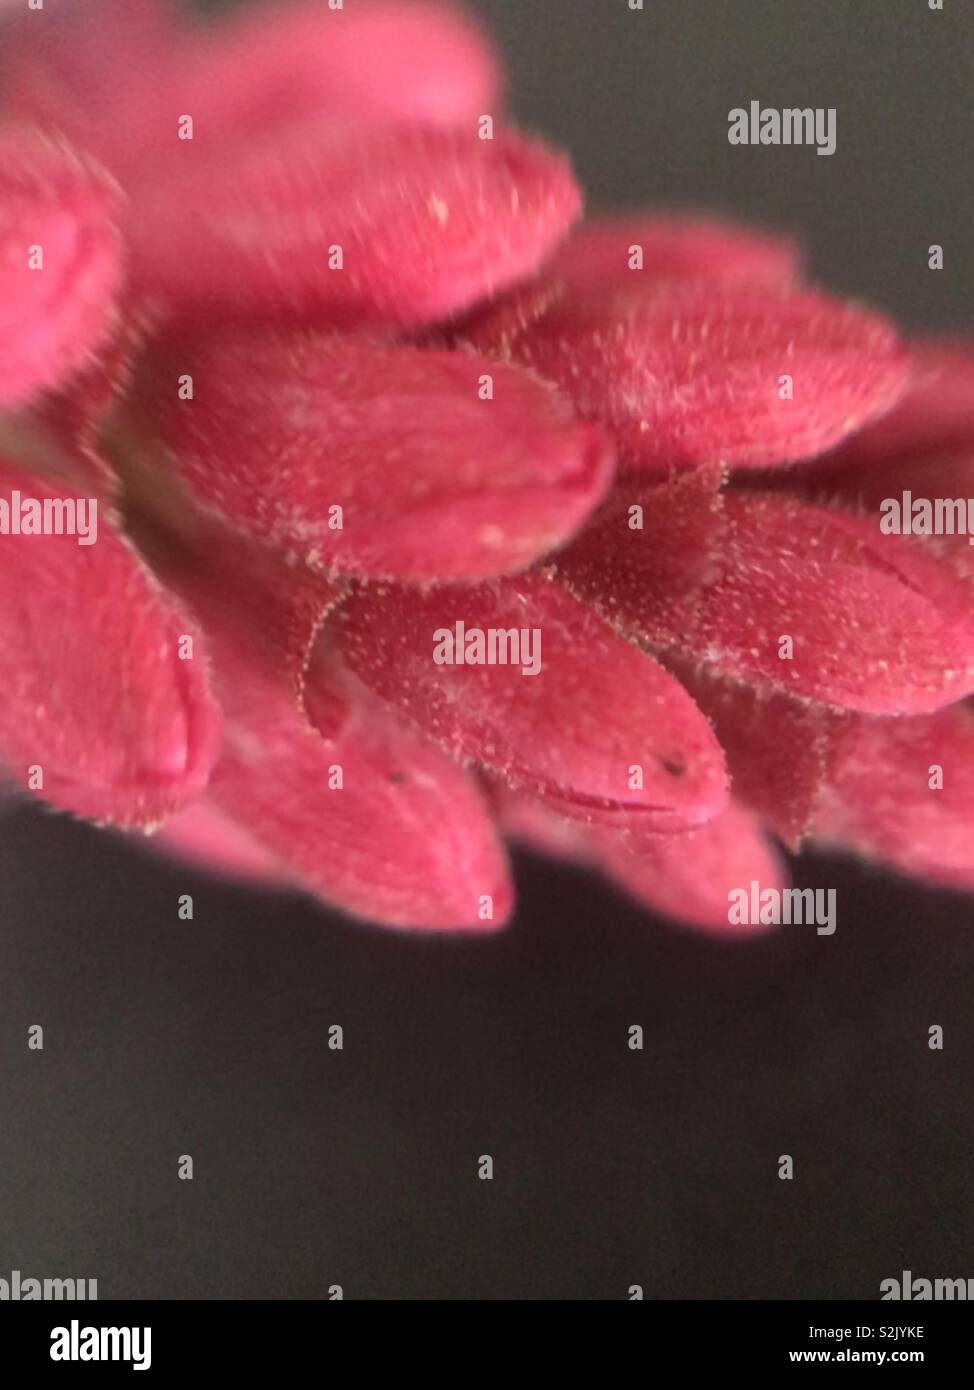 Ribes sanguineum glutinosum 'Claremont' pink flowering currant Stock Photo